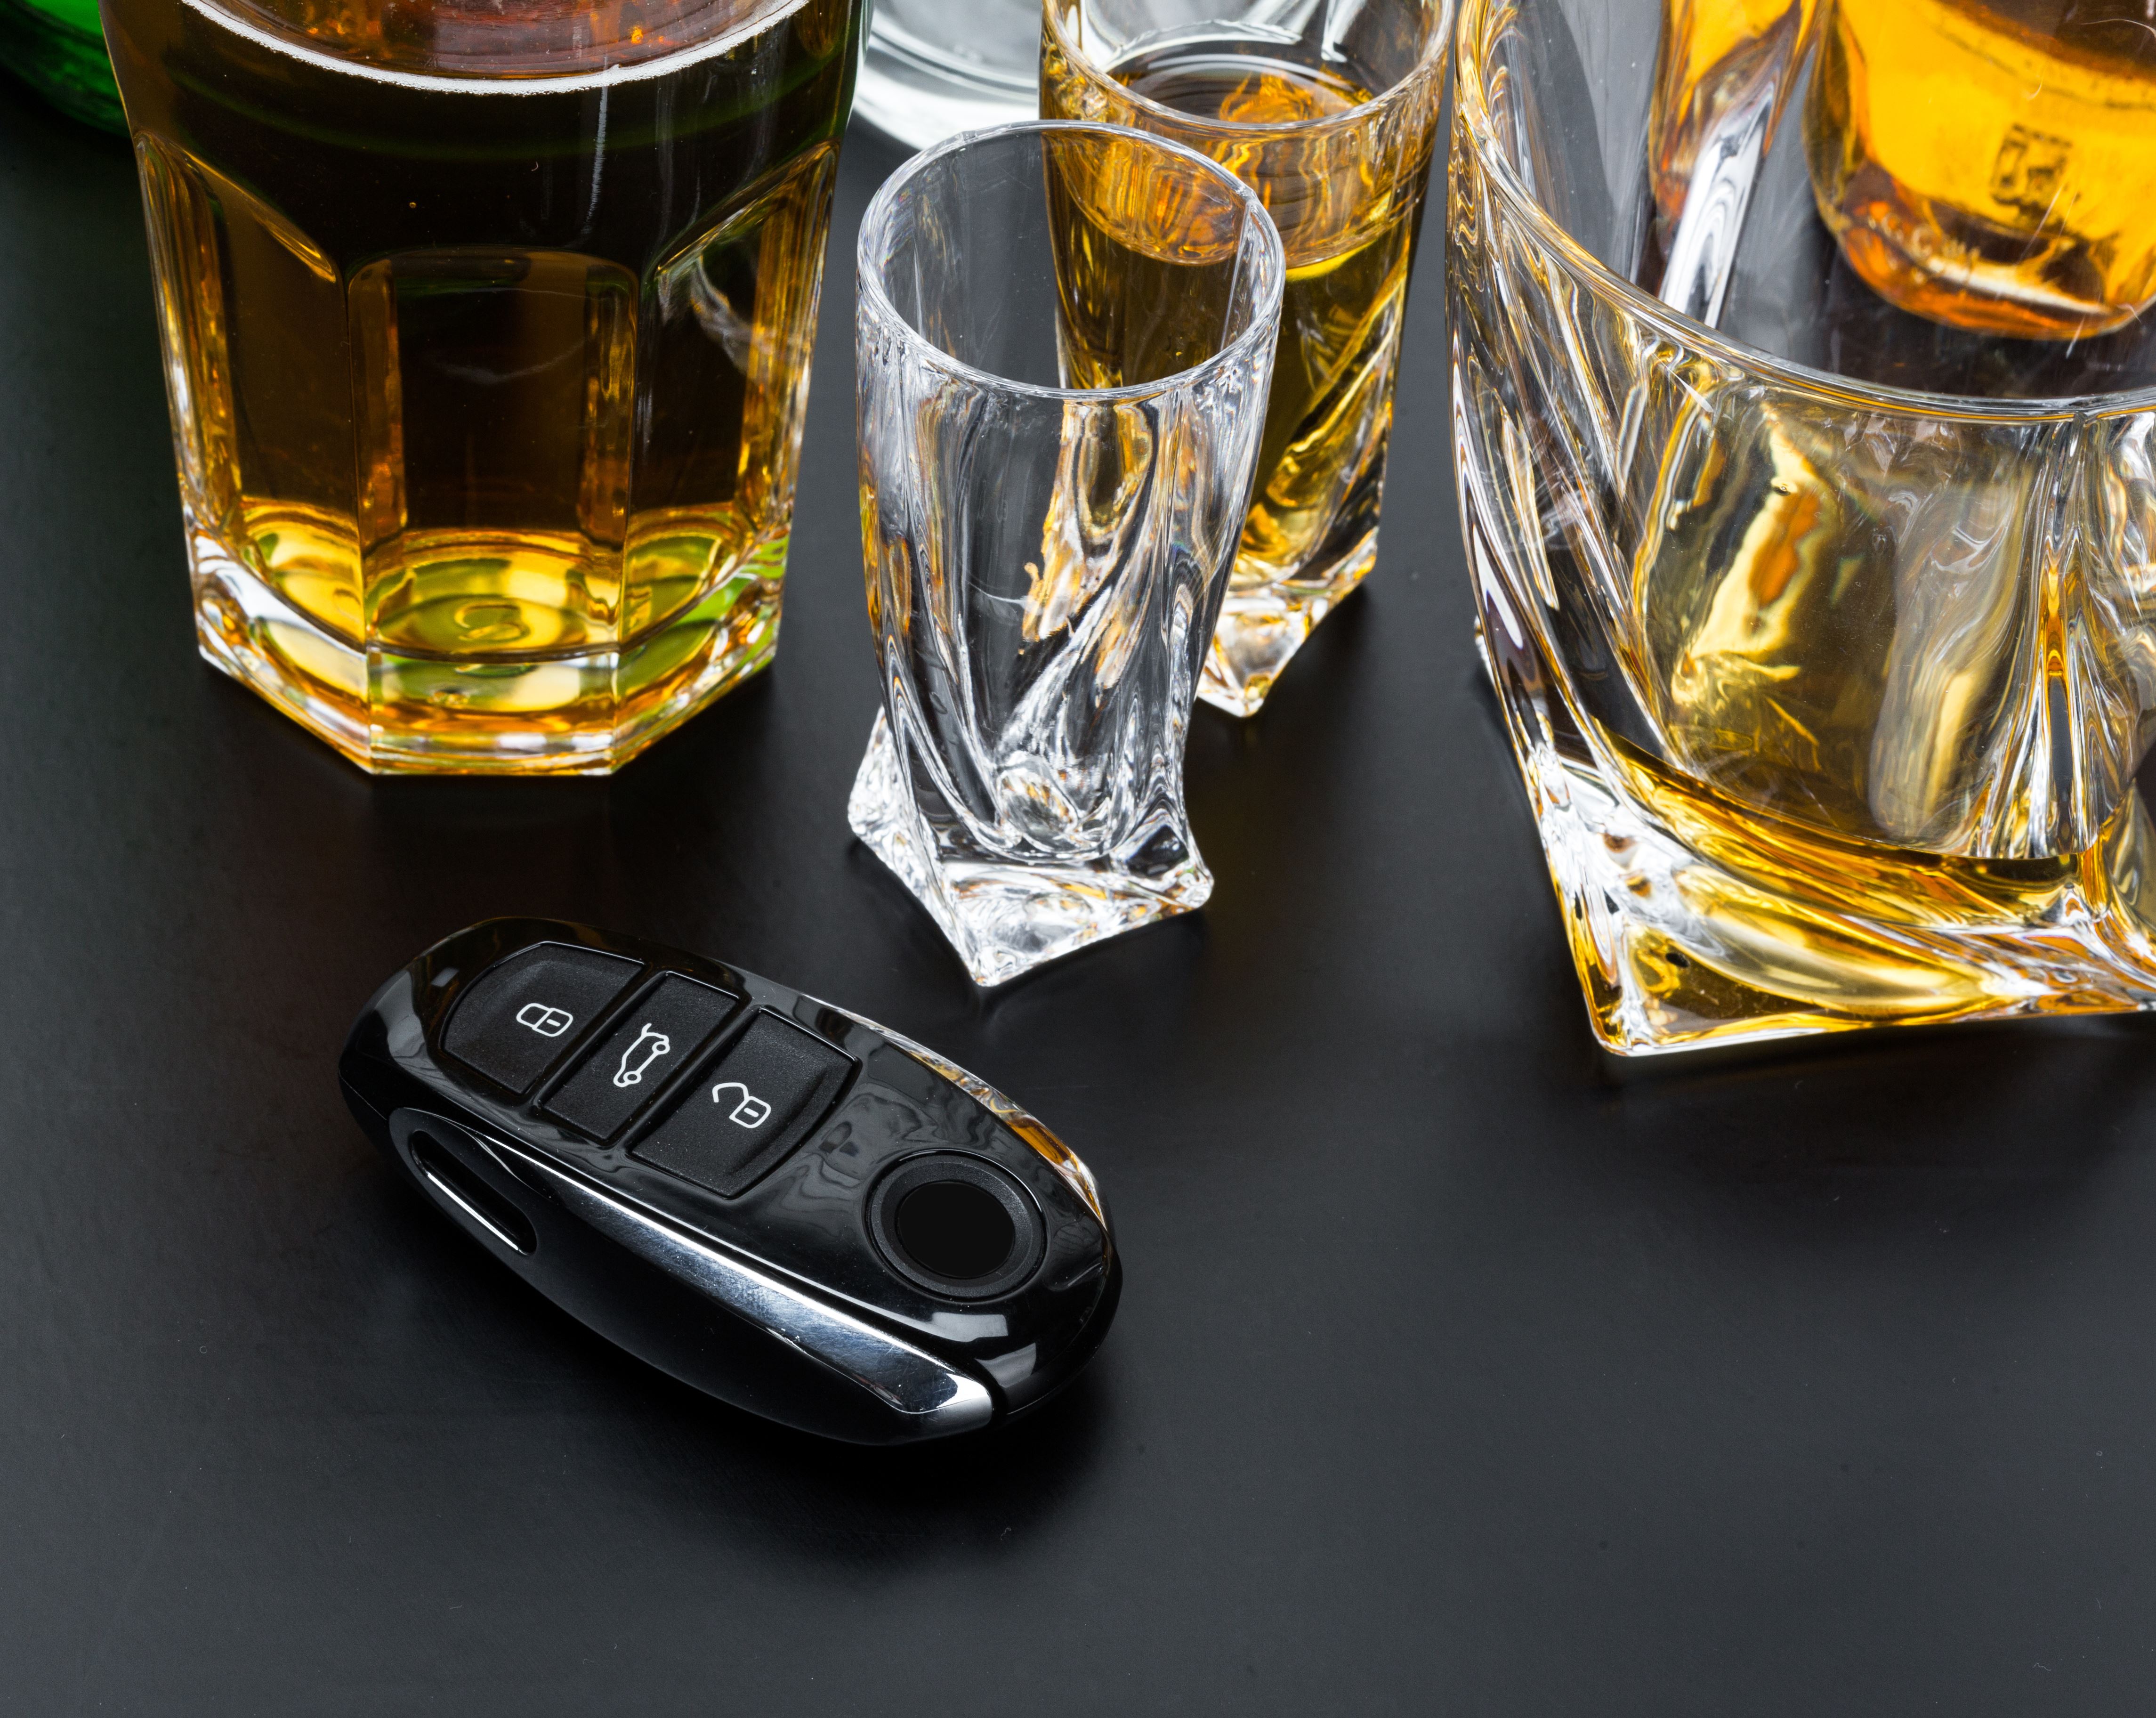 Alcohol and car keys - OUI 2nd offense Massachusetts